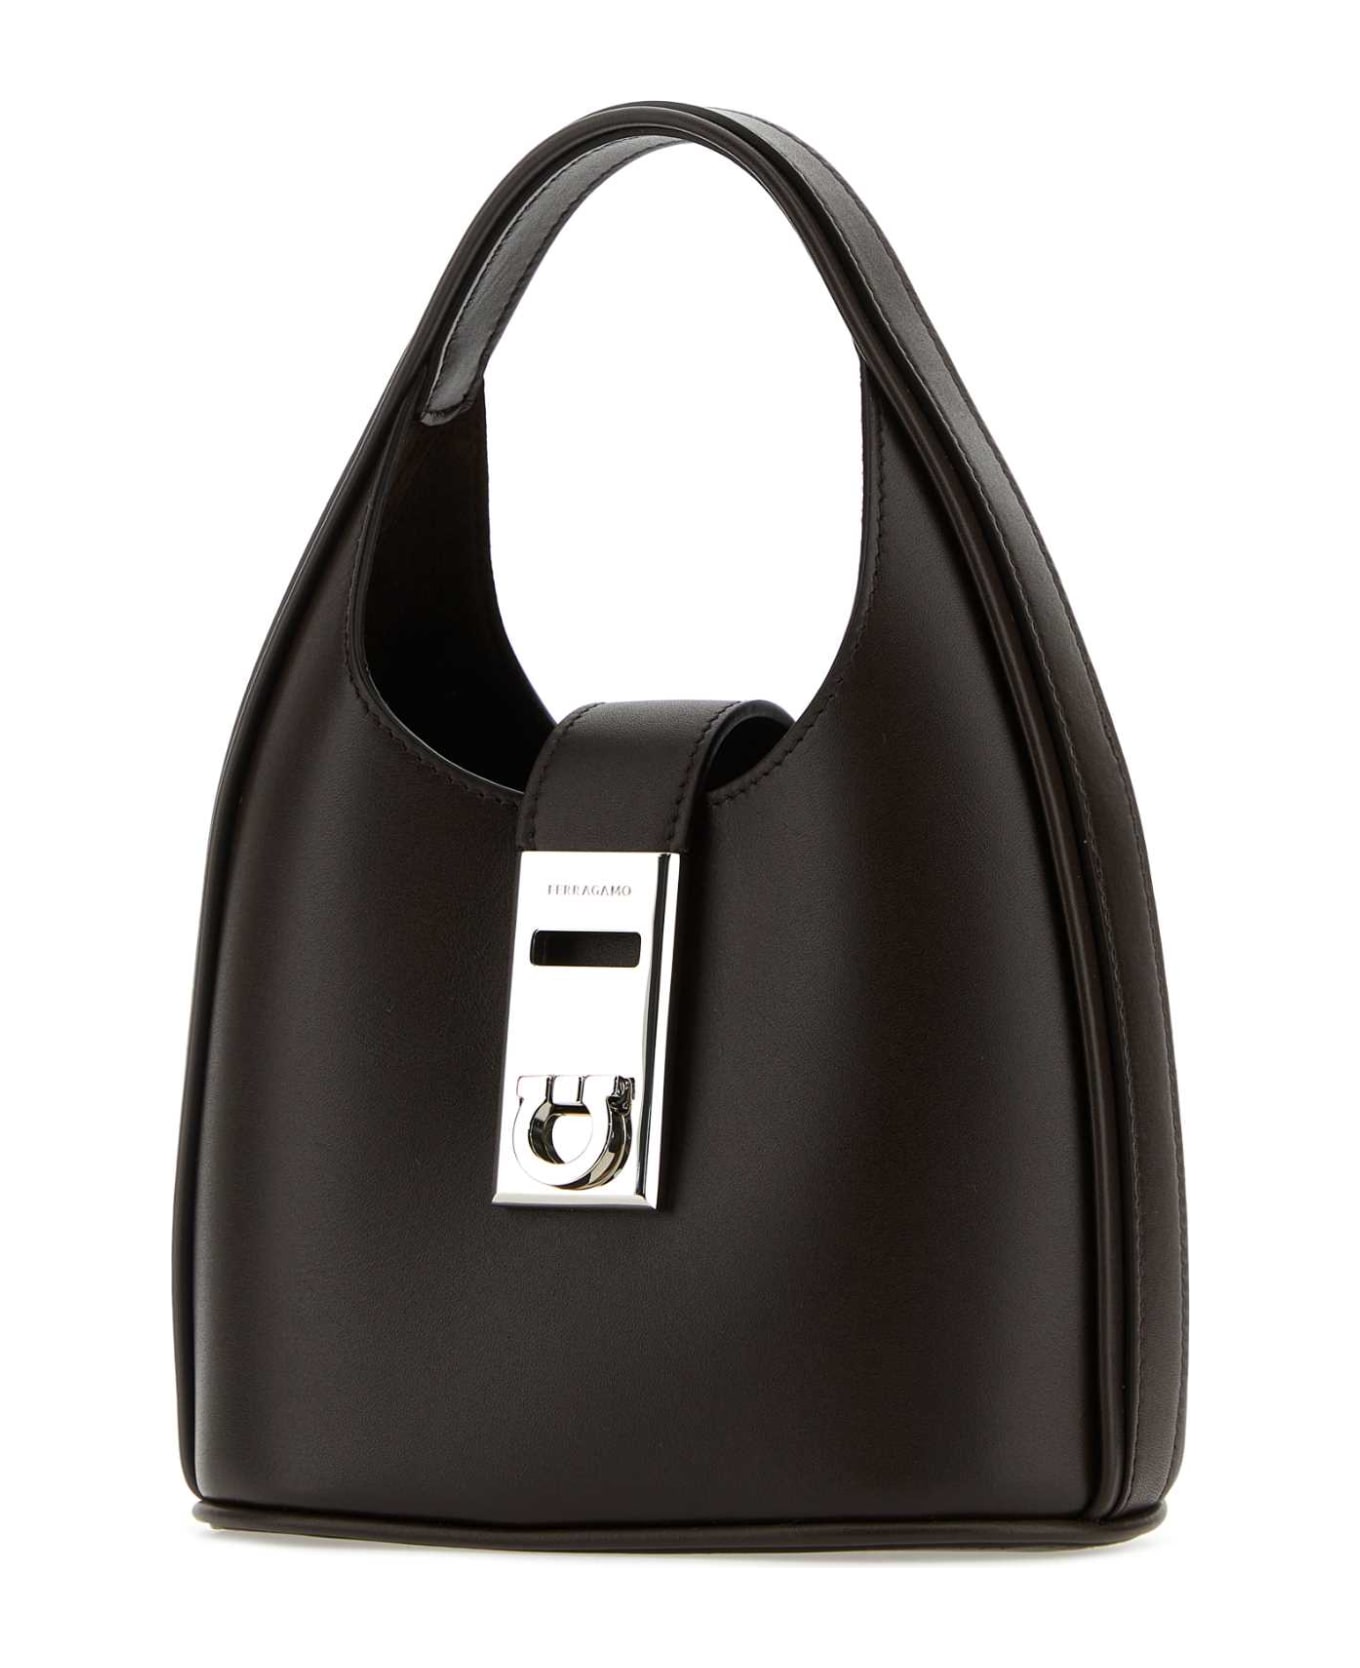 Ferragamo Dark Brown Leather Handbag - BROWN